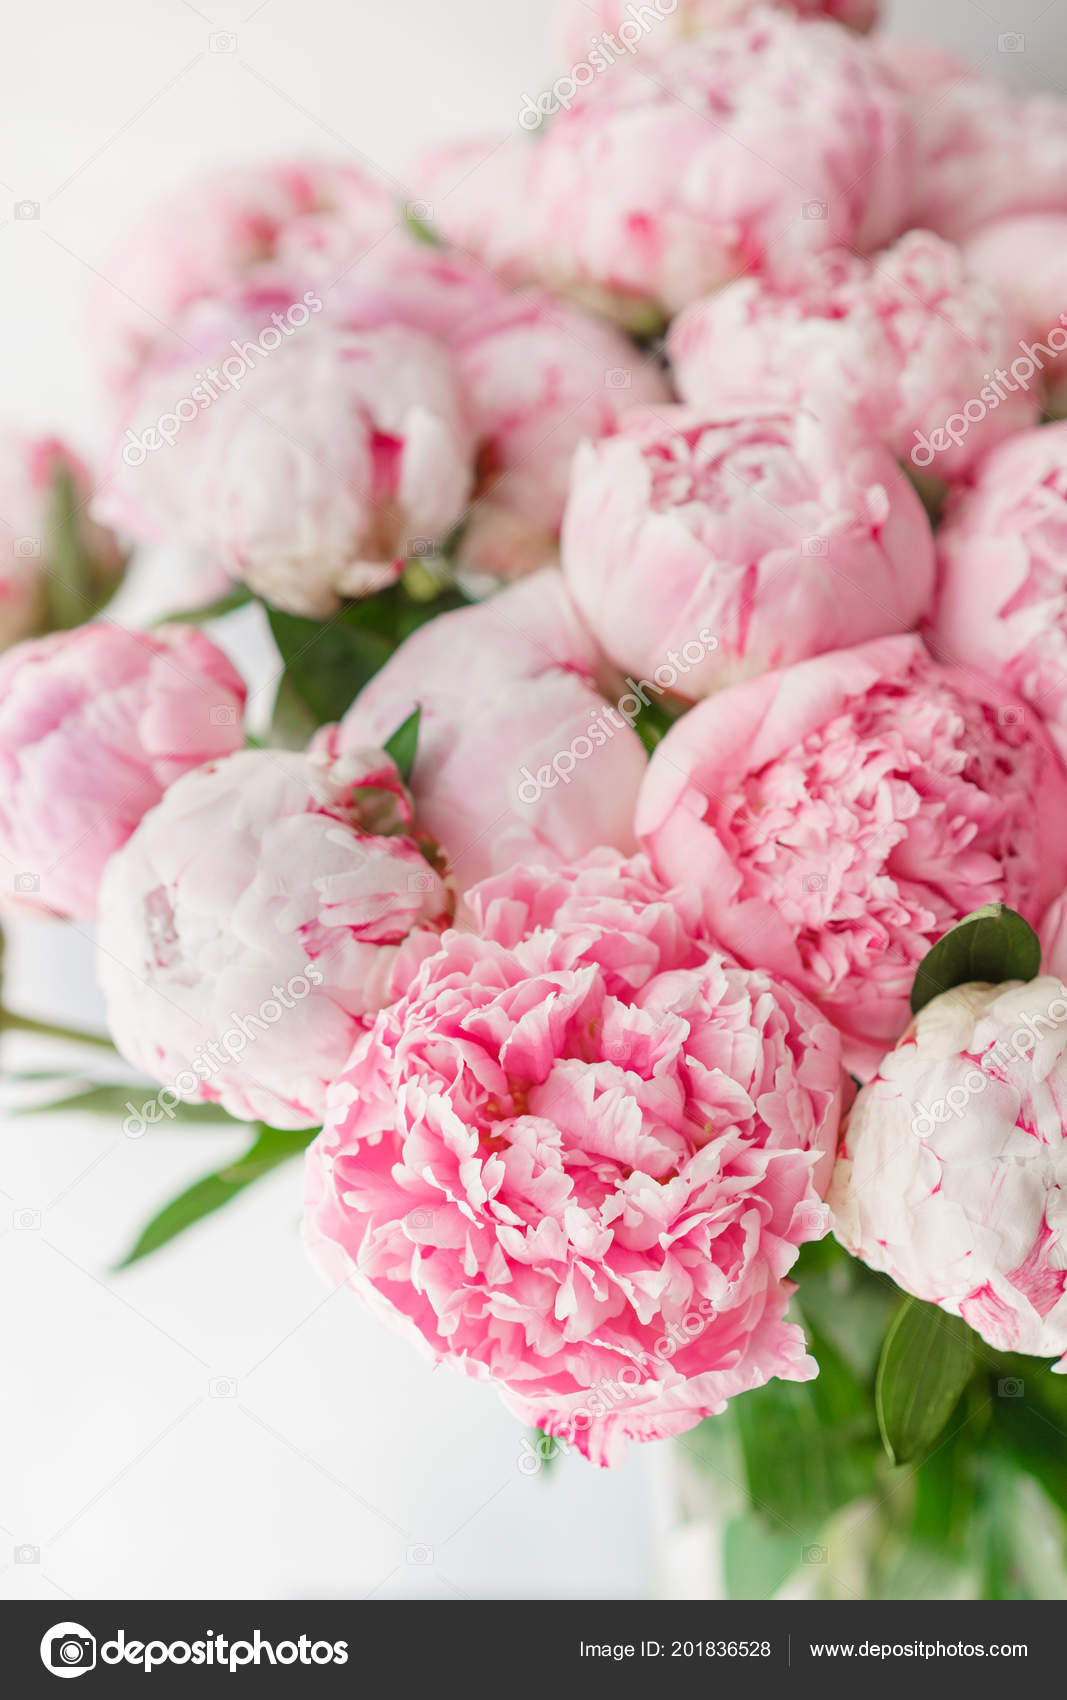 Wallpapers: beautiful flowers bouquet | Beautiful bouquet of pink ...